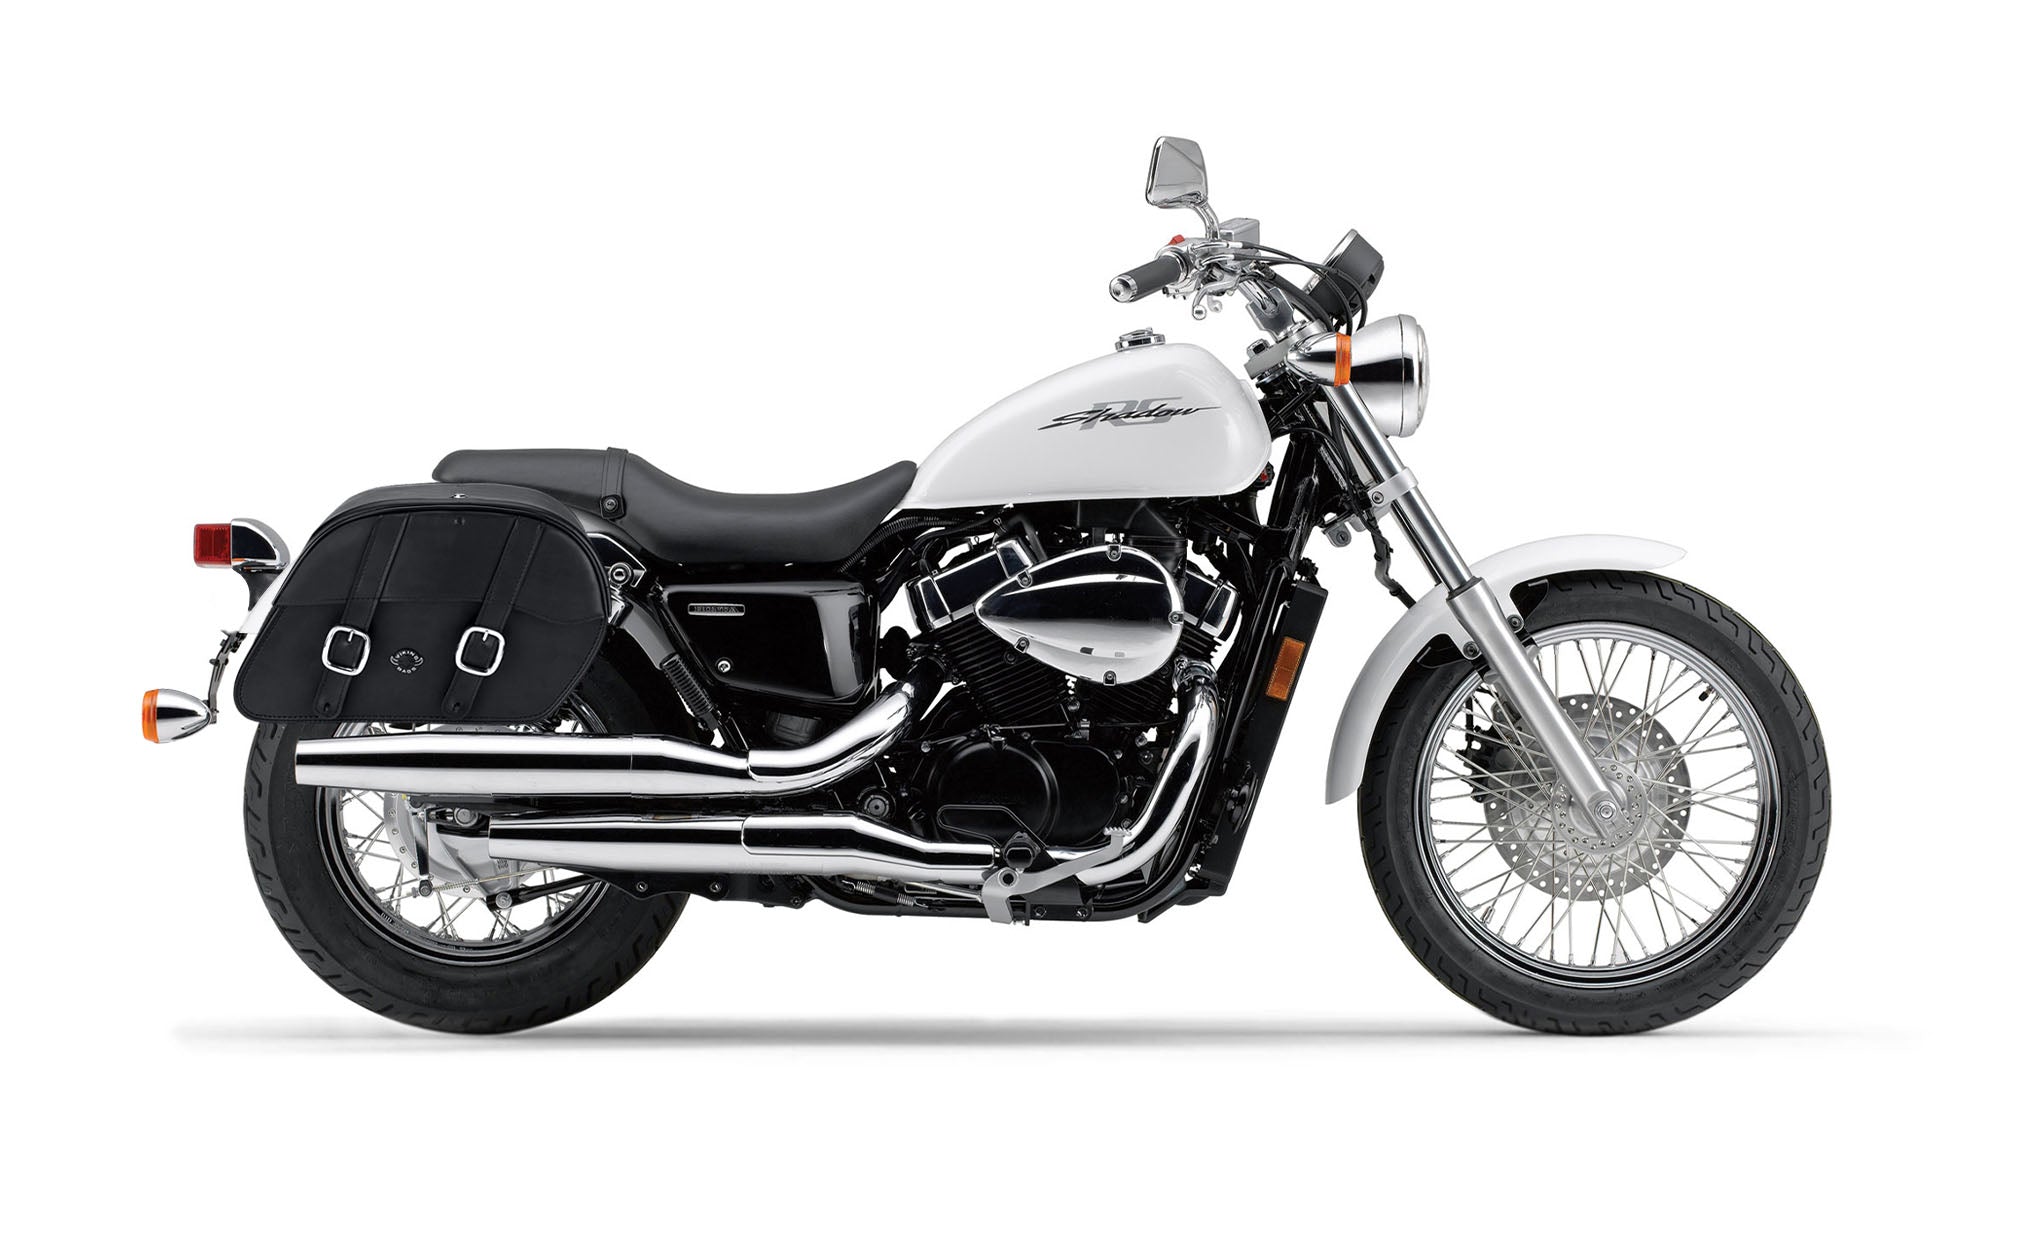 Viking Skarner Large Honda Shadow 750 Rs Shock Cut Out Leather Motorcycle Saddlebags on Bike Photo @expand